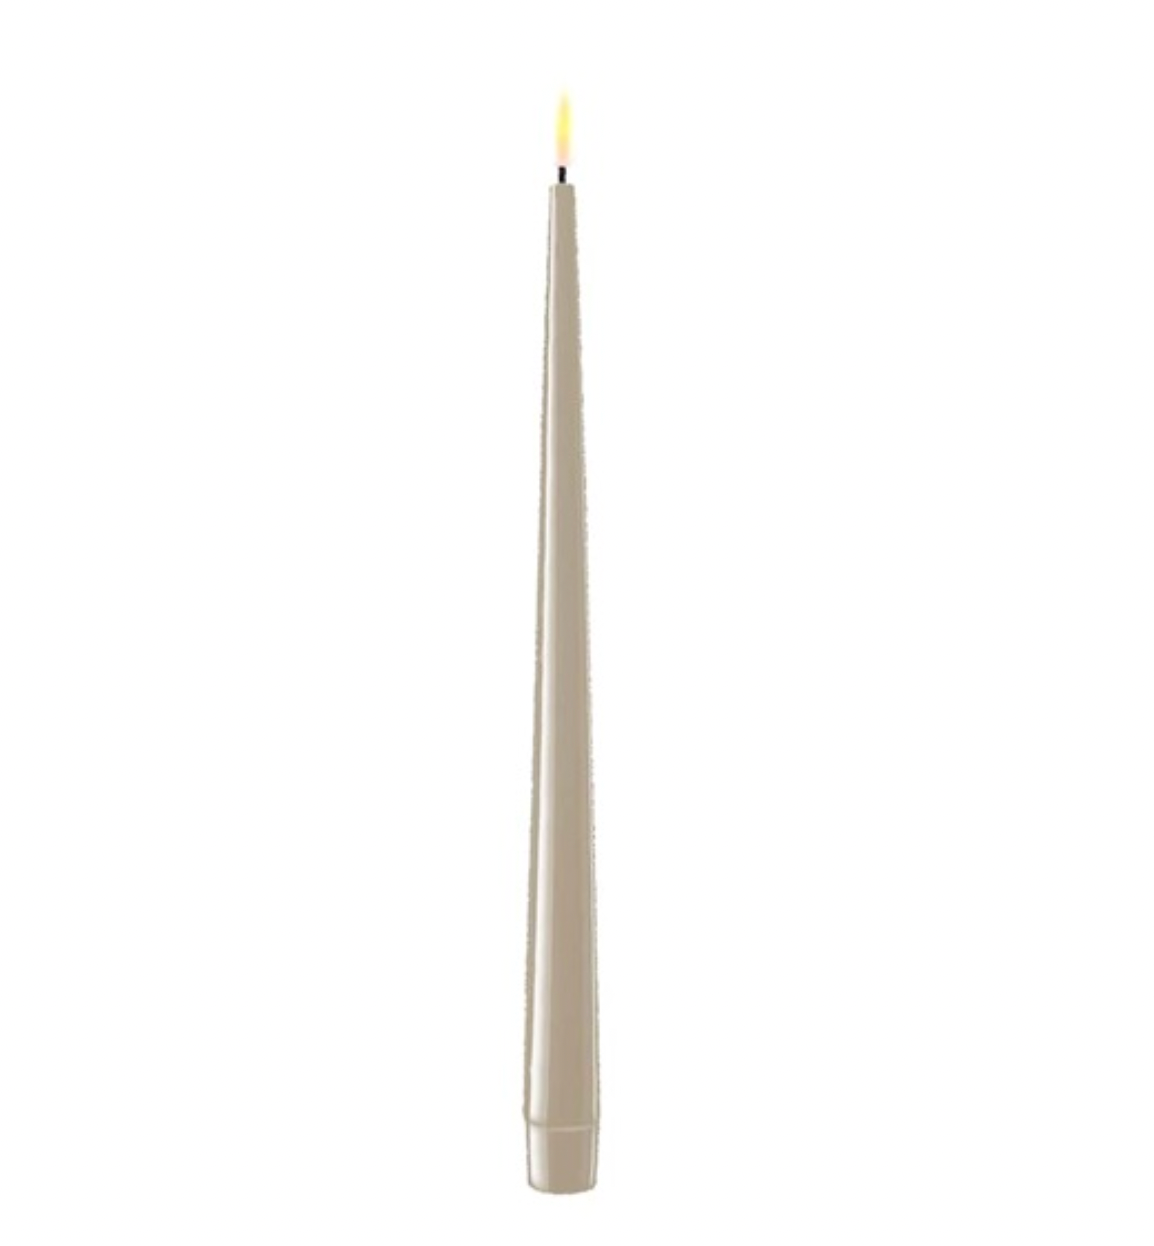 Deluxe Homeart 2PCK Shiny Sand LED Dinner Candles - 28 cm